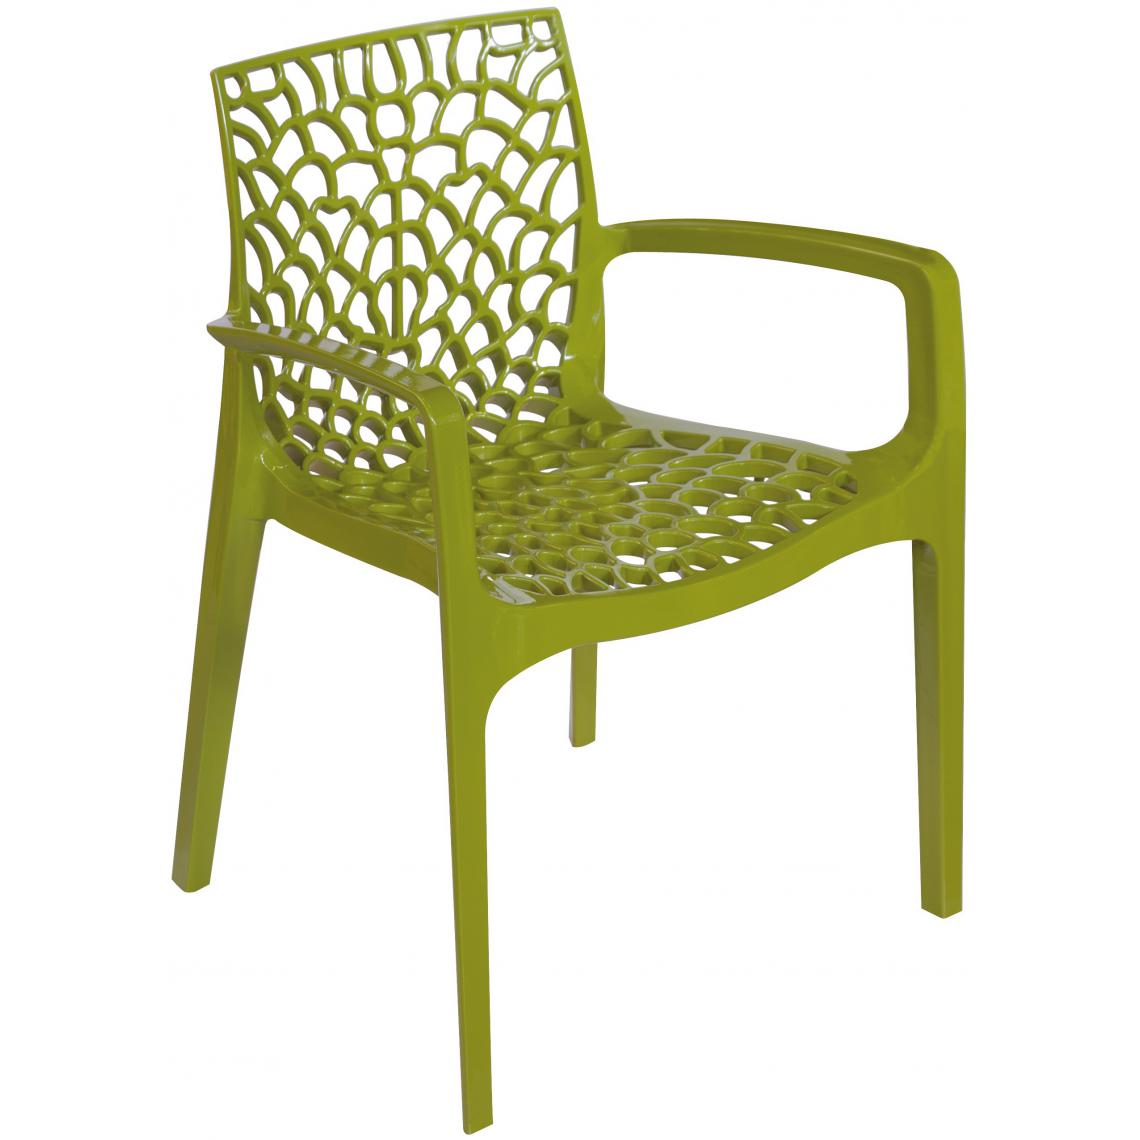 3S. x Home - Chaise Design Verte Anis Avec Accoudoirs GRUYER - Chaises